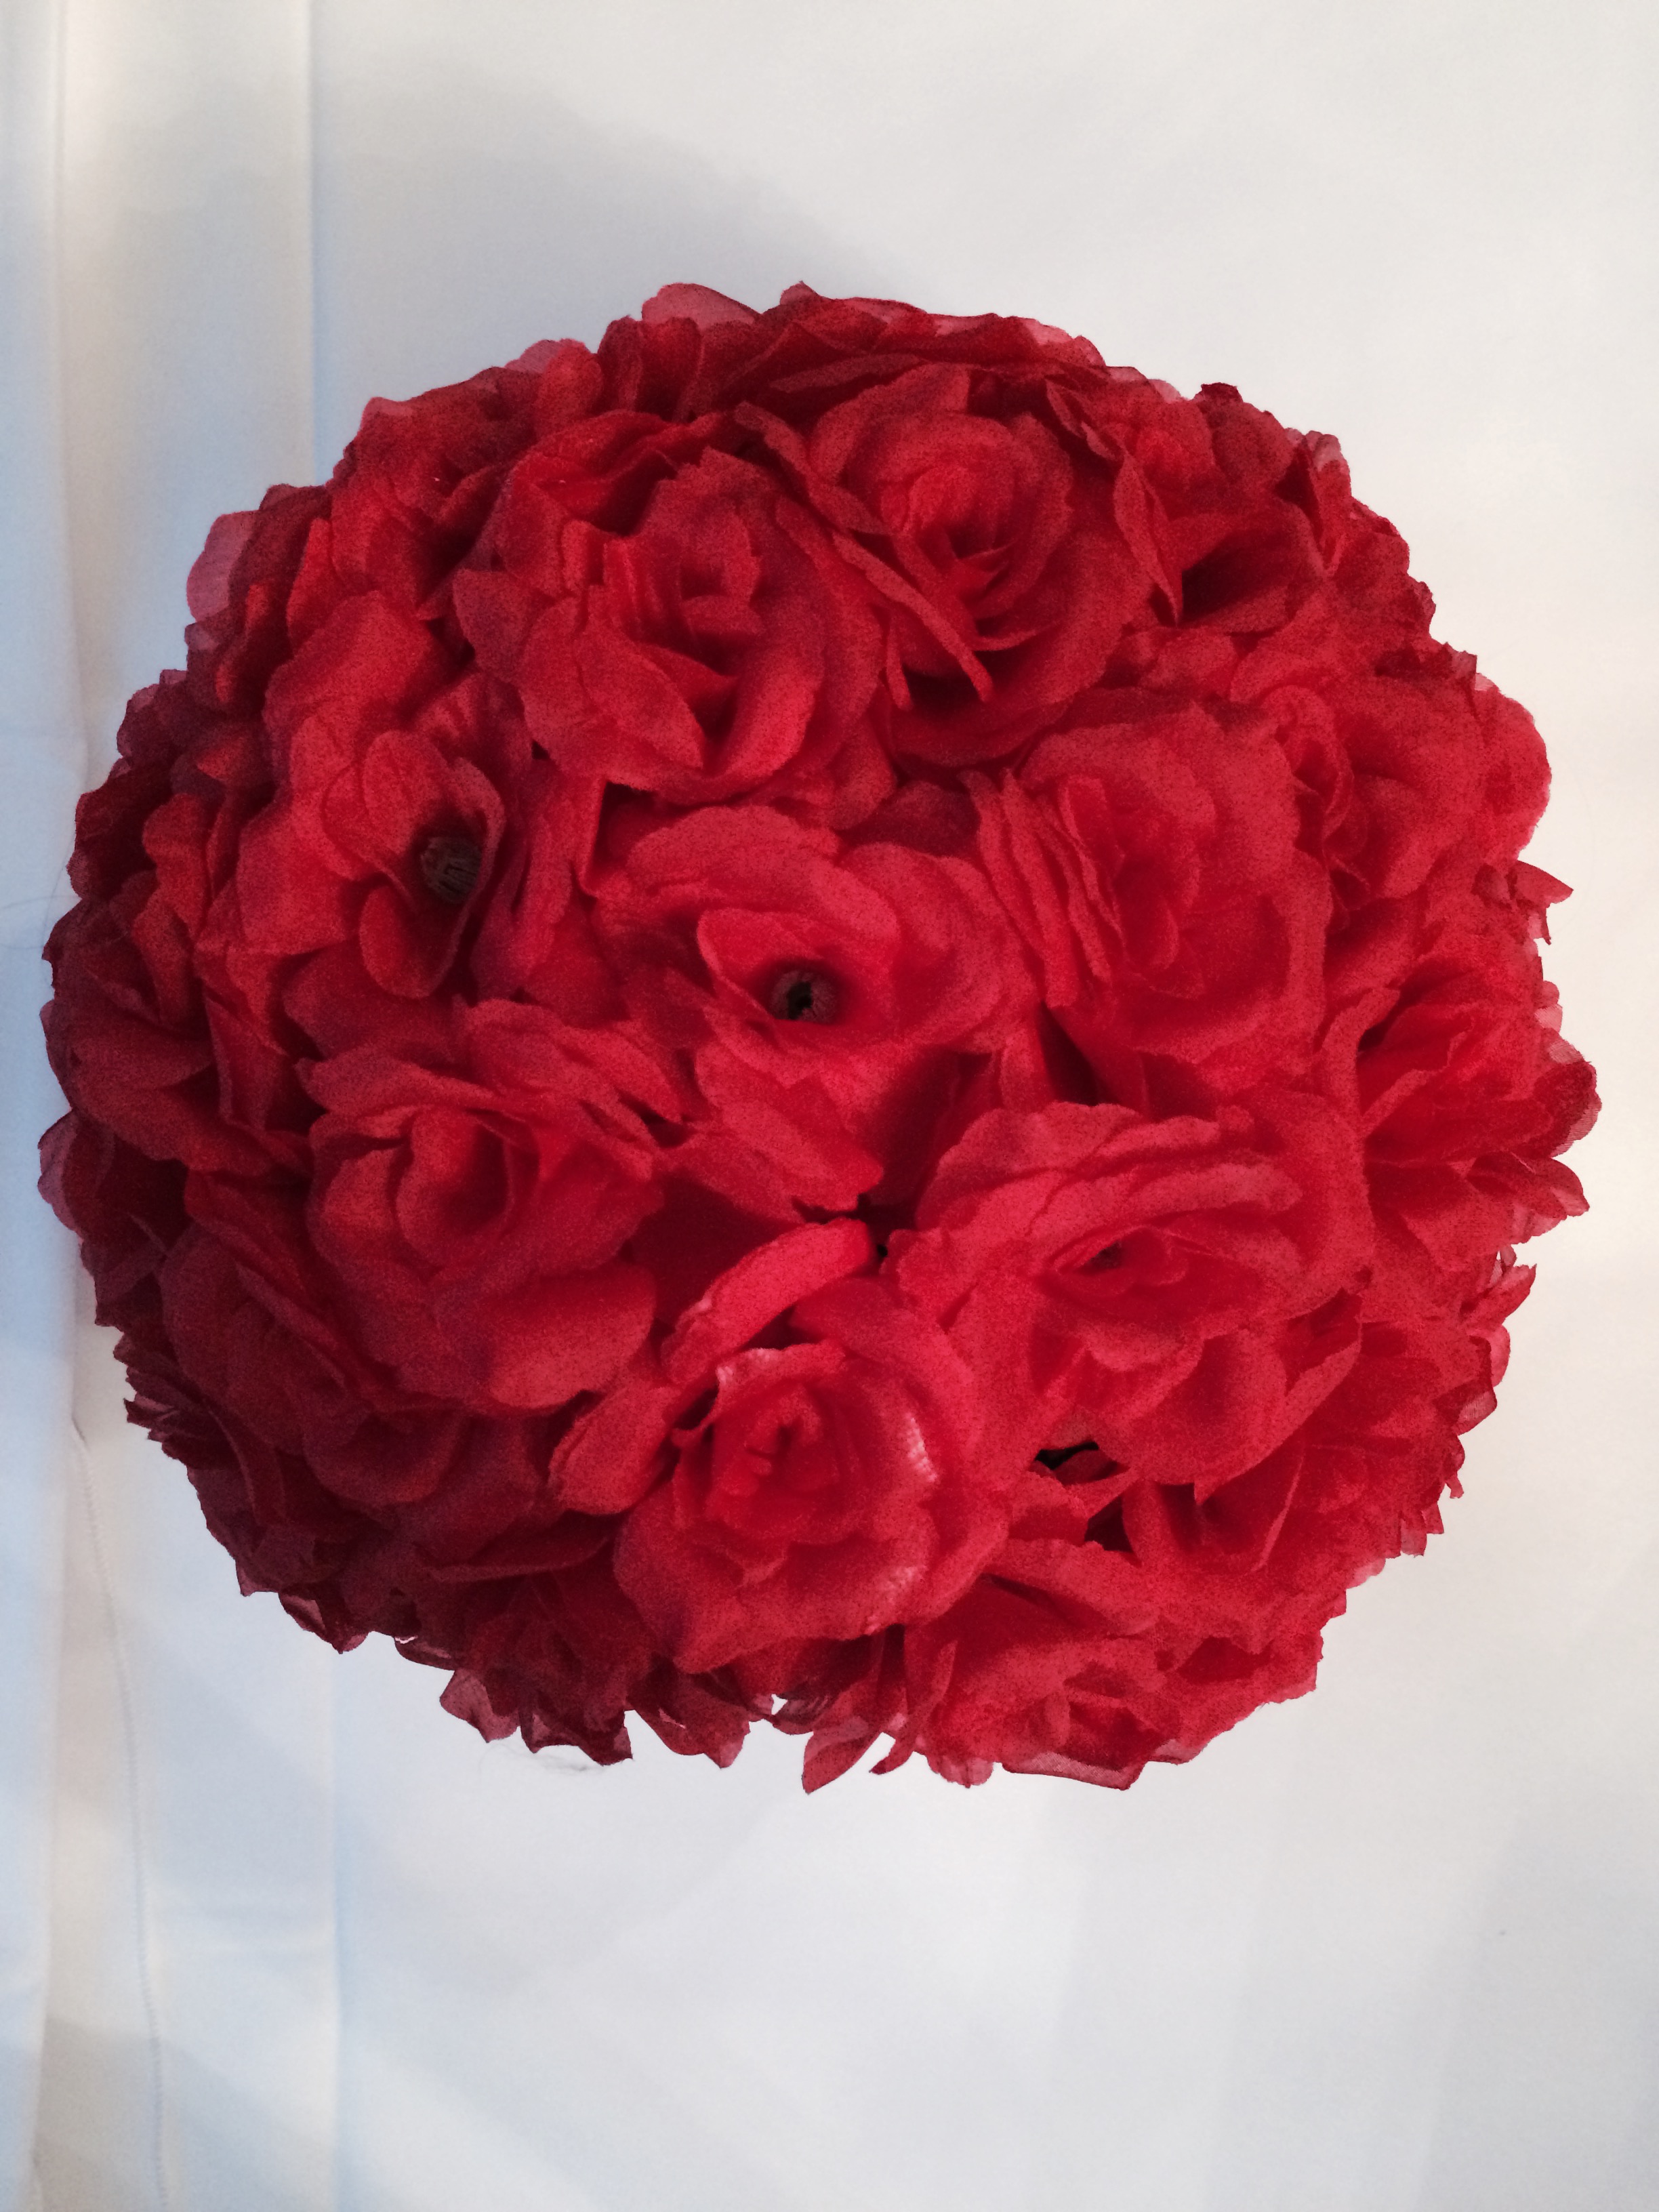 Boules-de-roses-20-Rouge.jpg